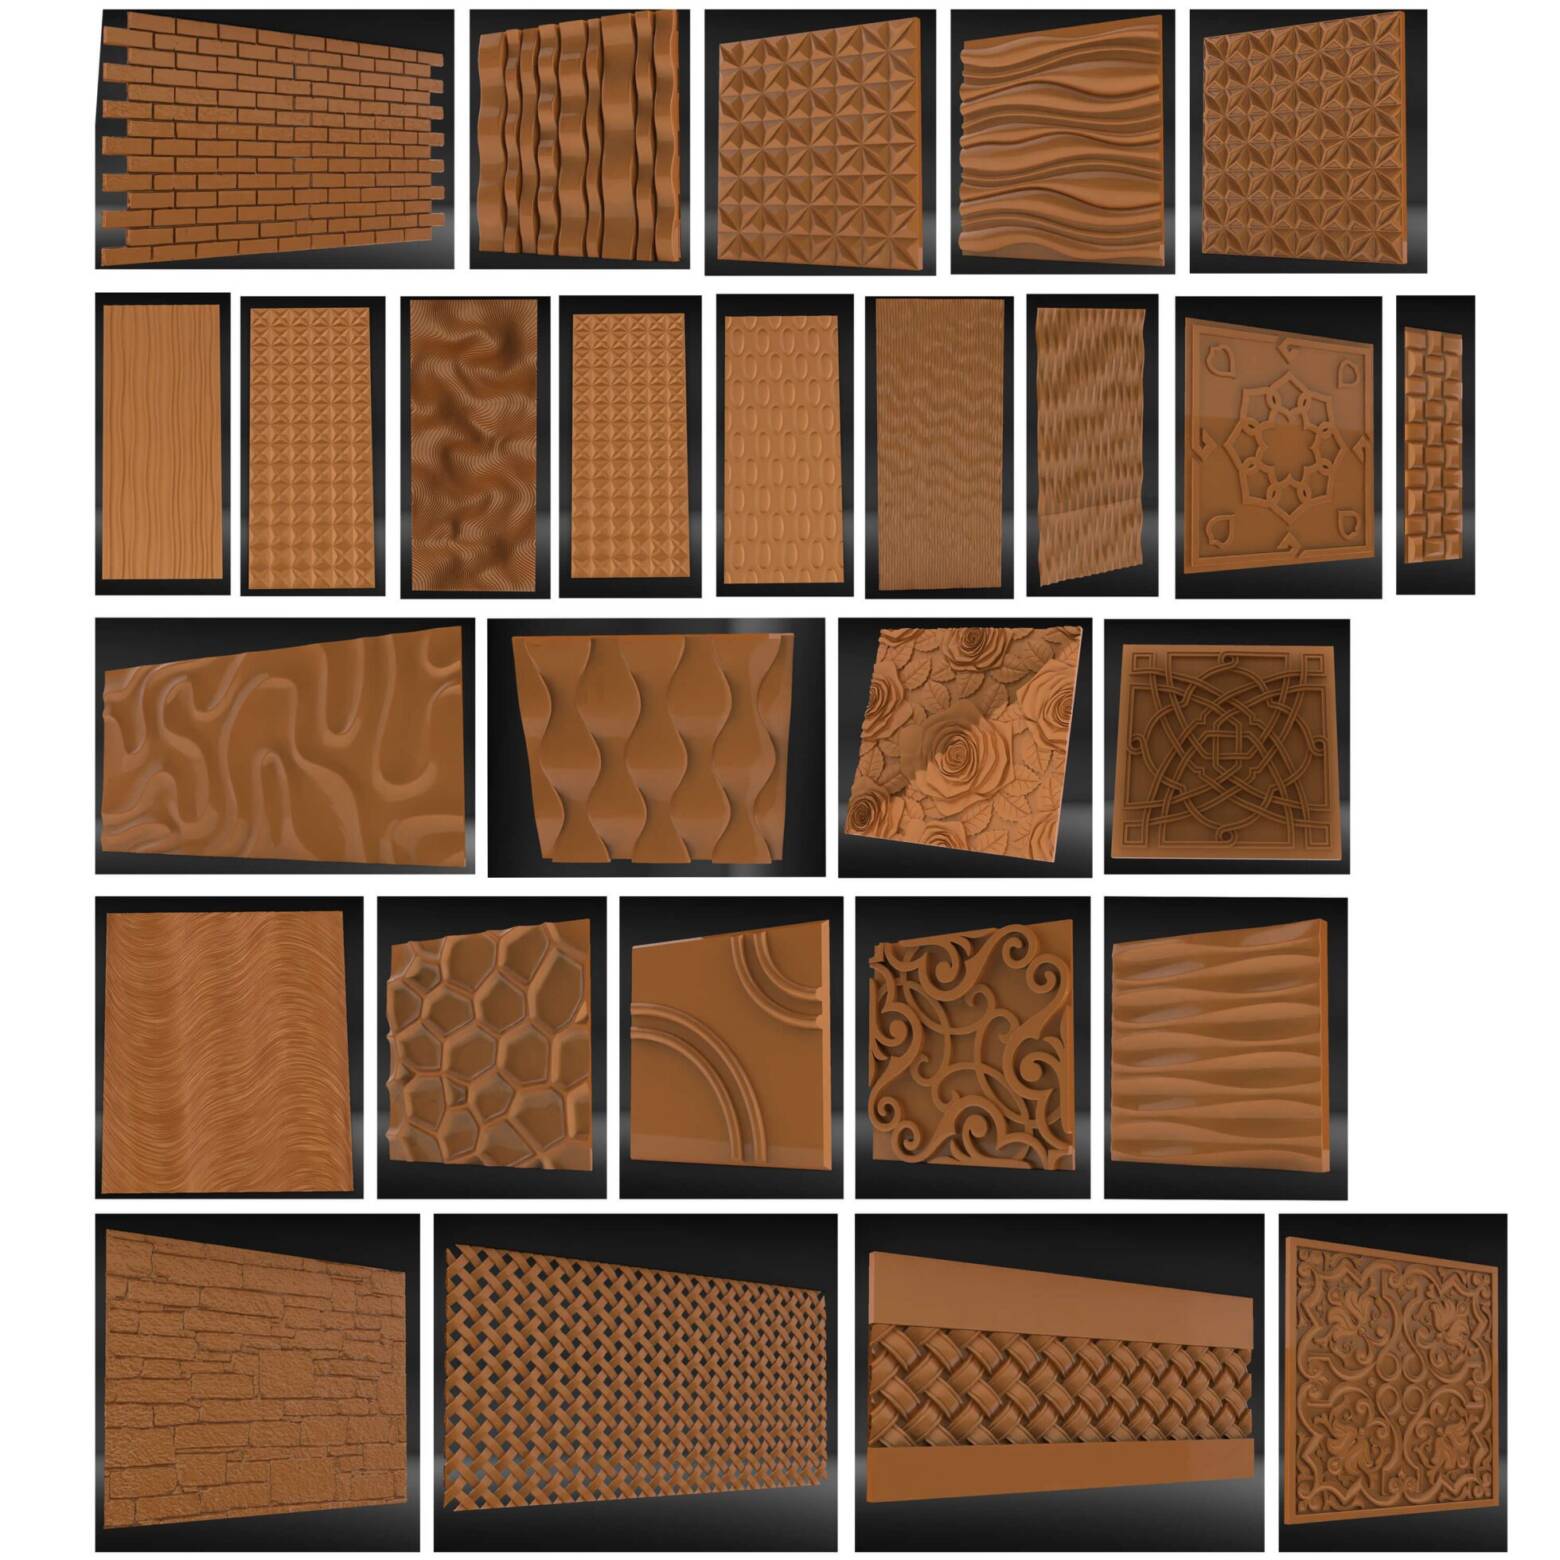 27 piezas archivos stl 3d modelos ladrillos paneles texturas para enrutador cnc 3d impresora grabador tallado.jpg